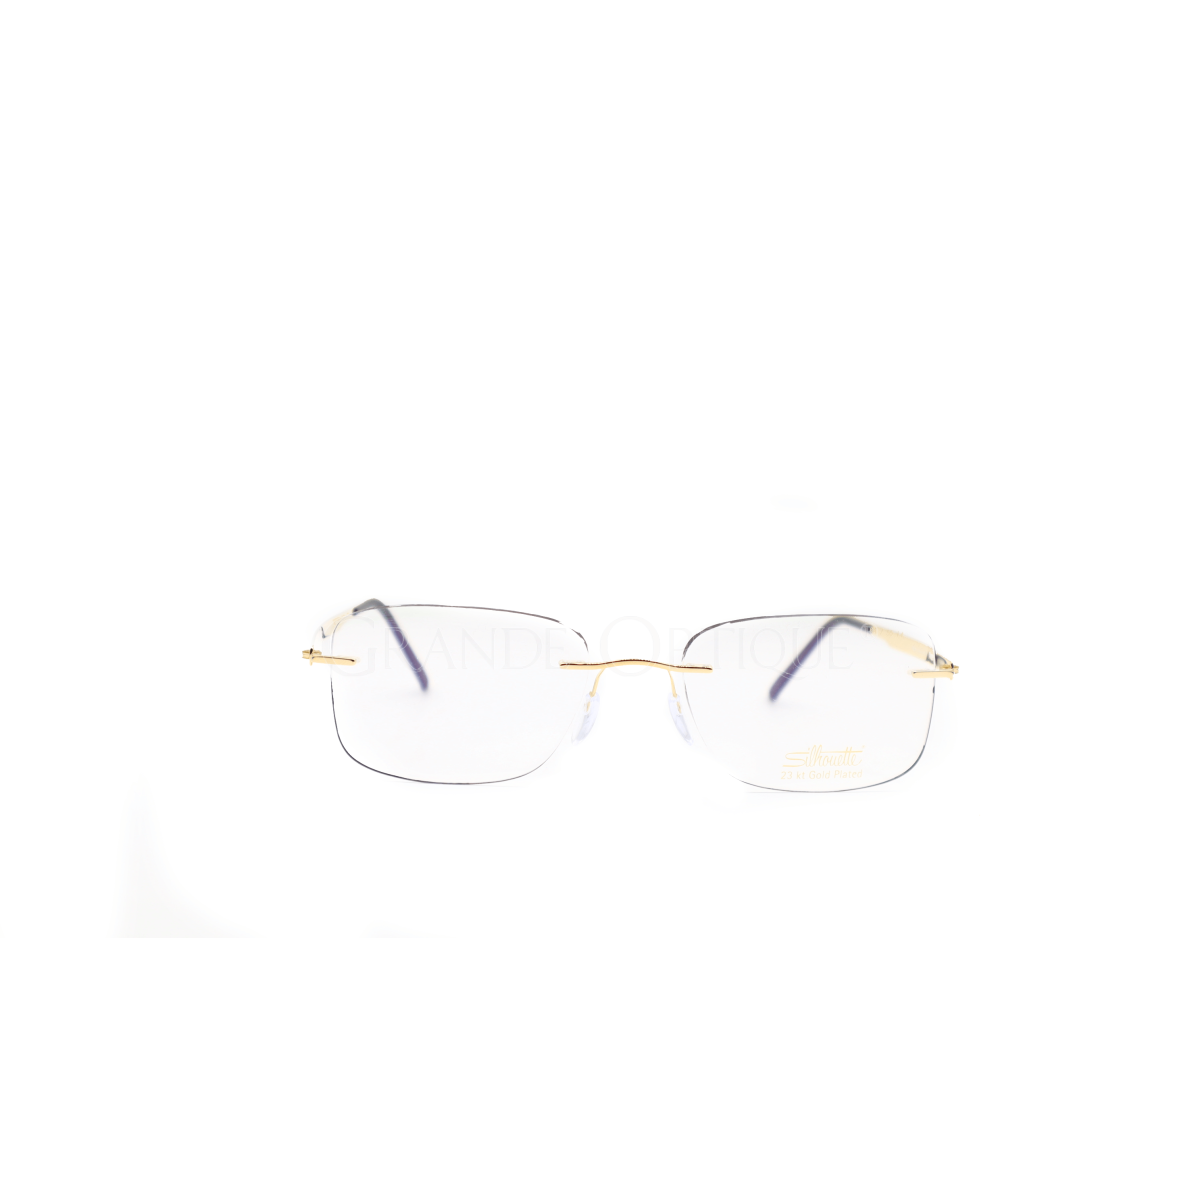 Rame de ochelari Silhouette 5554 KA 7520 placate cu aur 23k